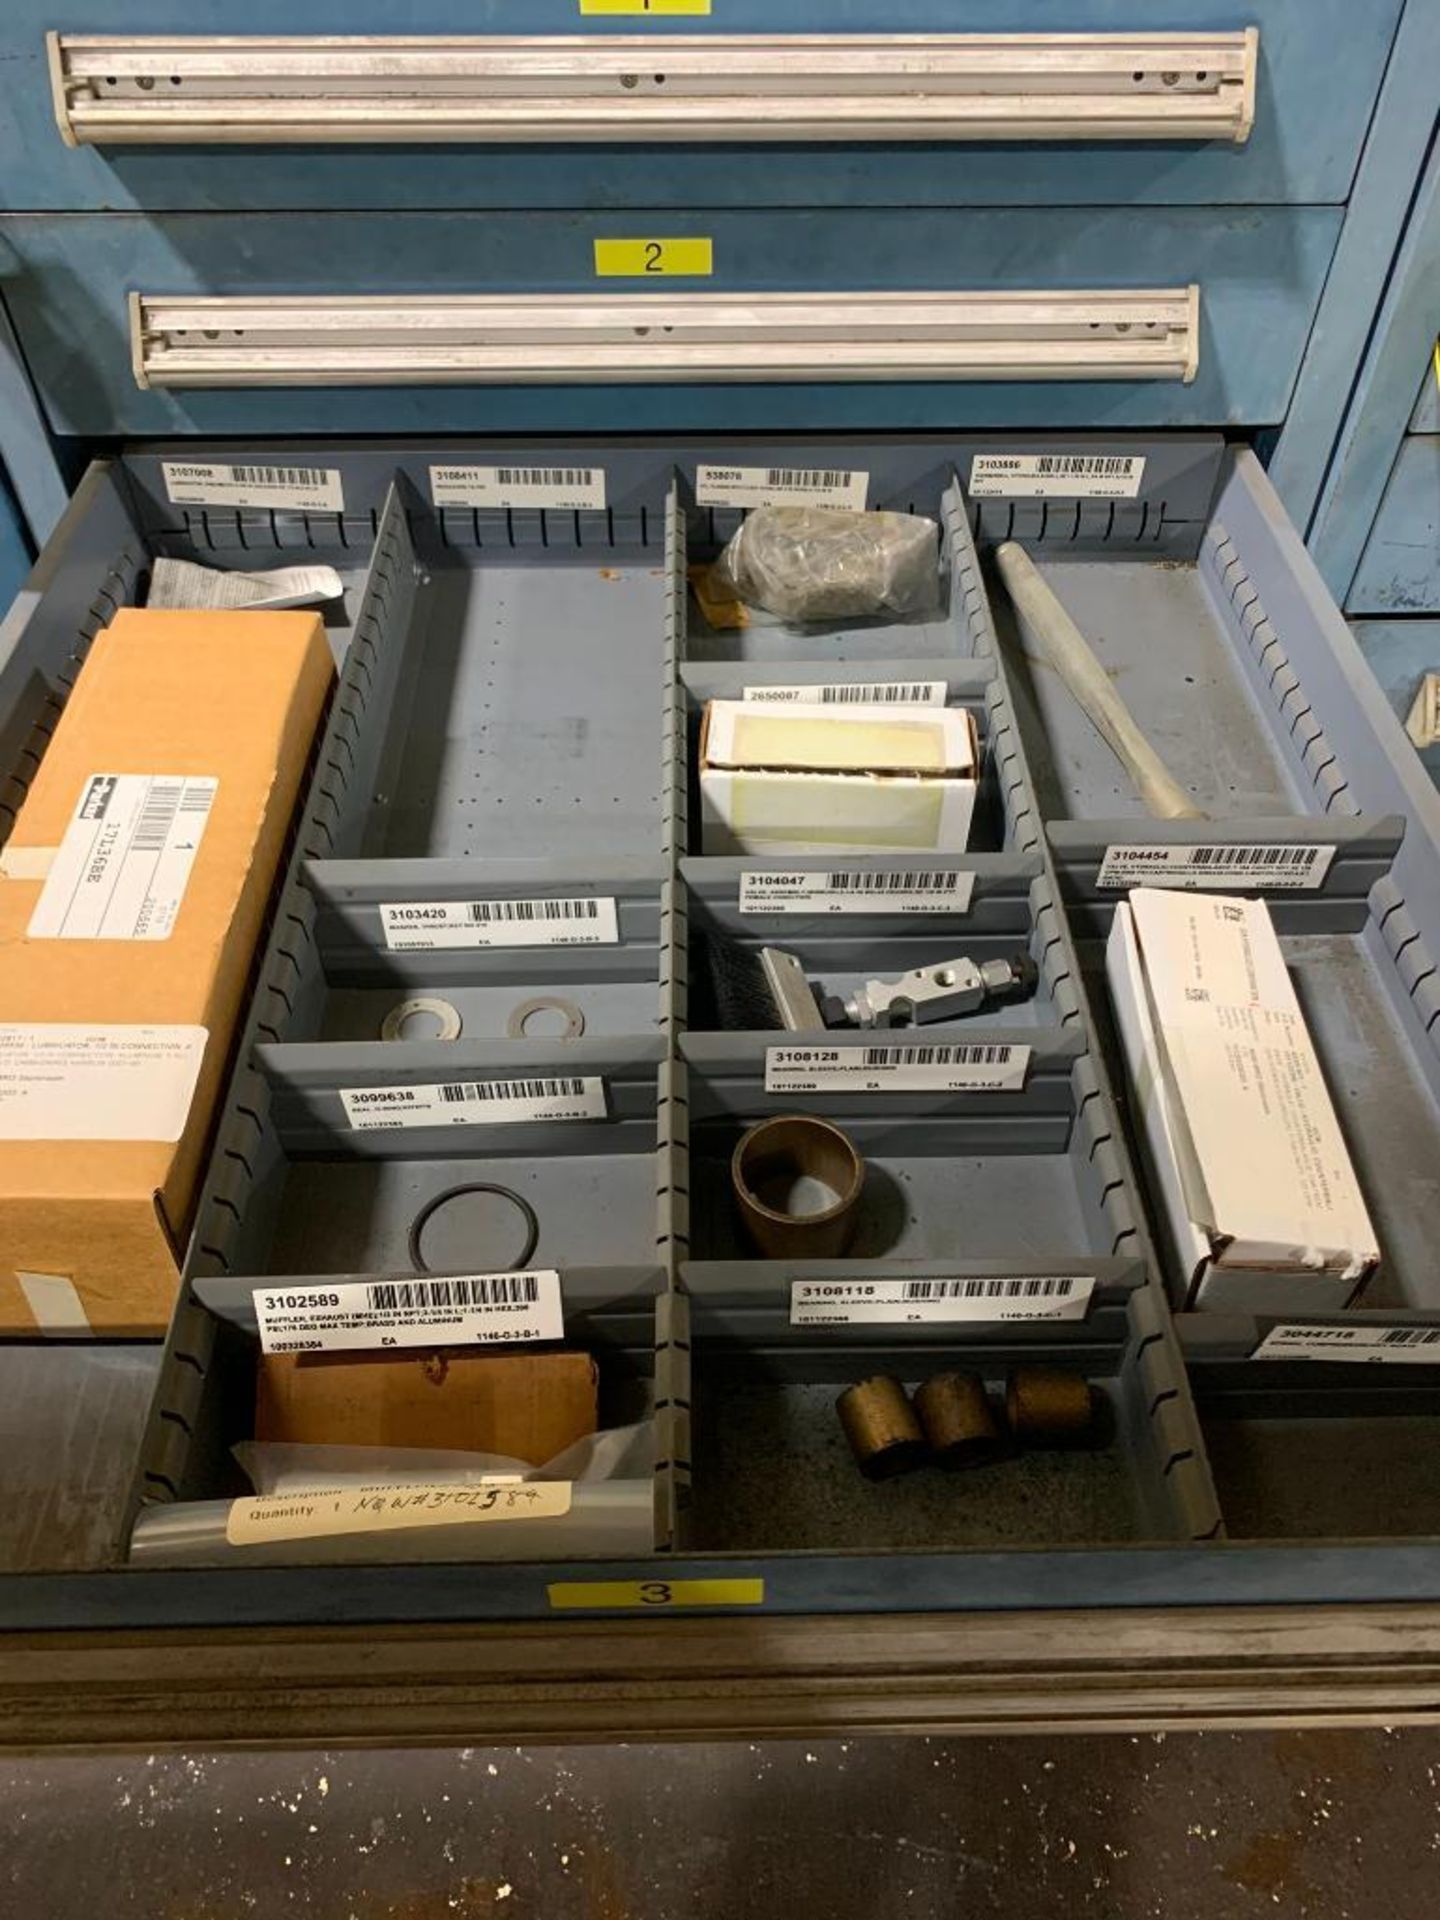 Stanley Vidmar 9-Drawer Cabinet w/ Nozzles, Pneumatic Pressure Regulators, Assorted Valves, Lubricat - Image 4 of 10